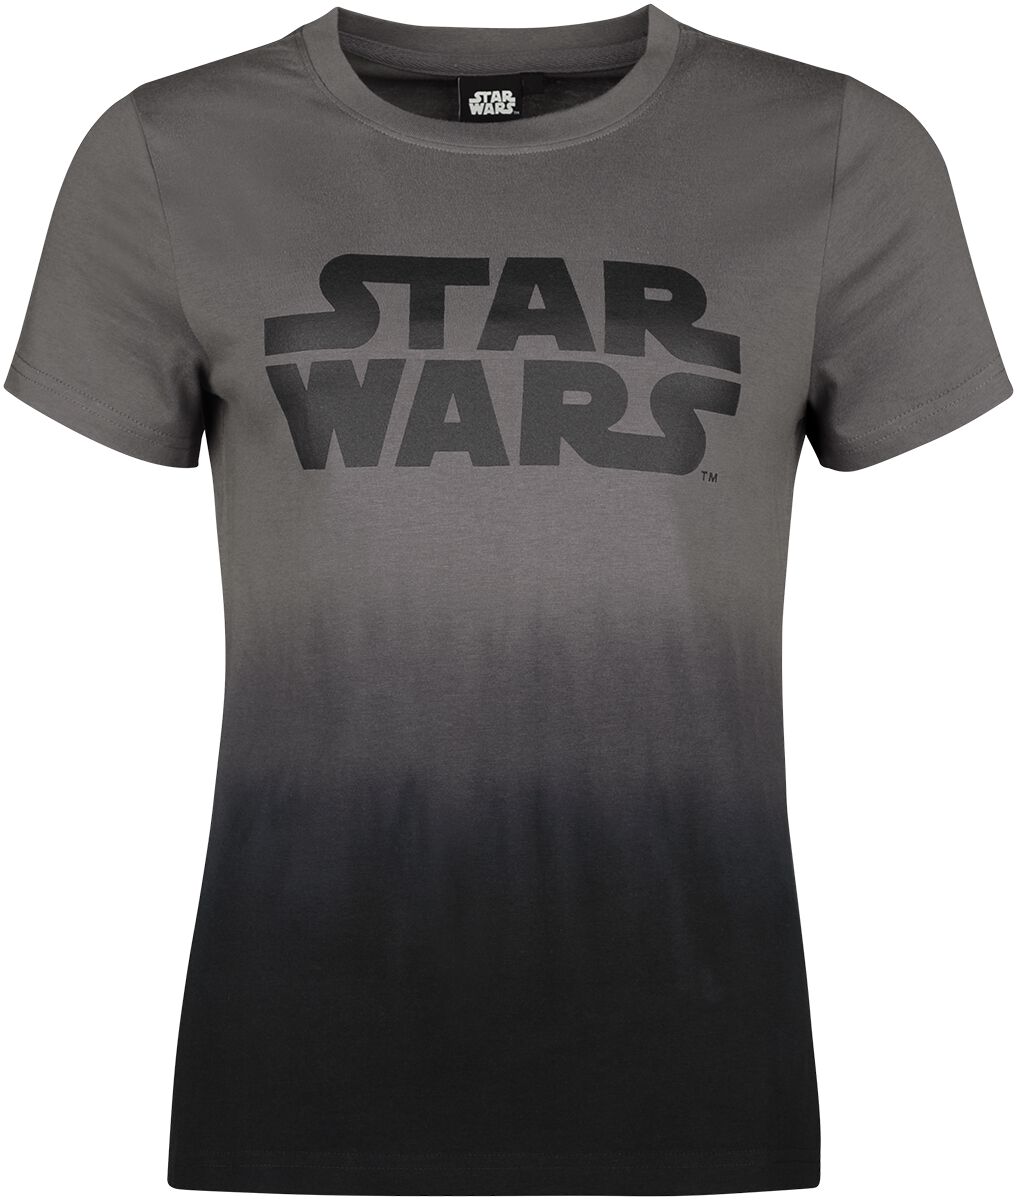 Image of T-Shirt di Star Wars - S a XL - Donna - multicolore